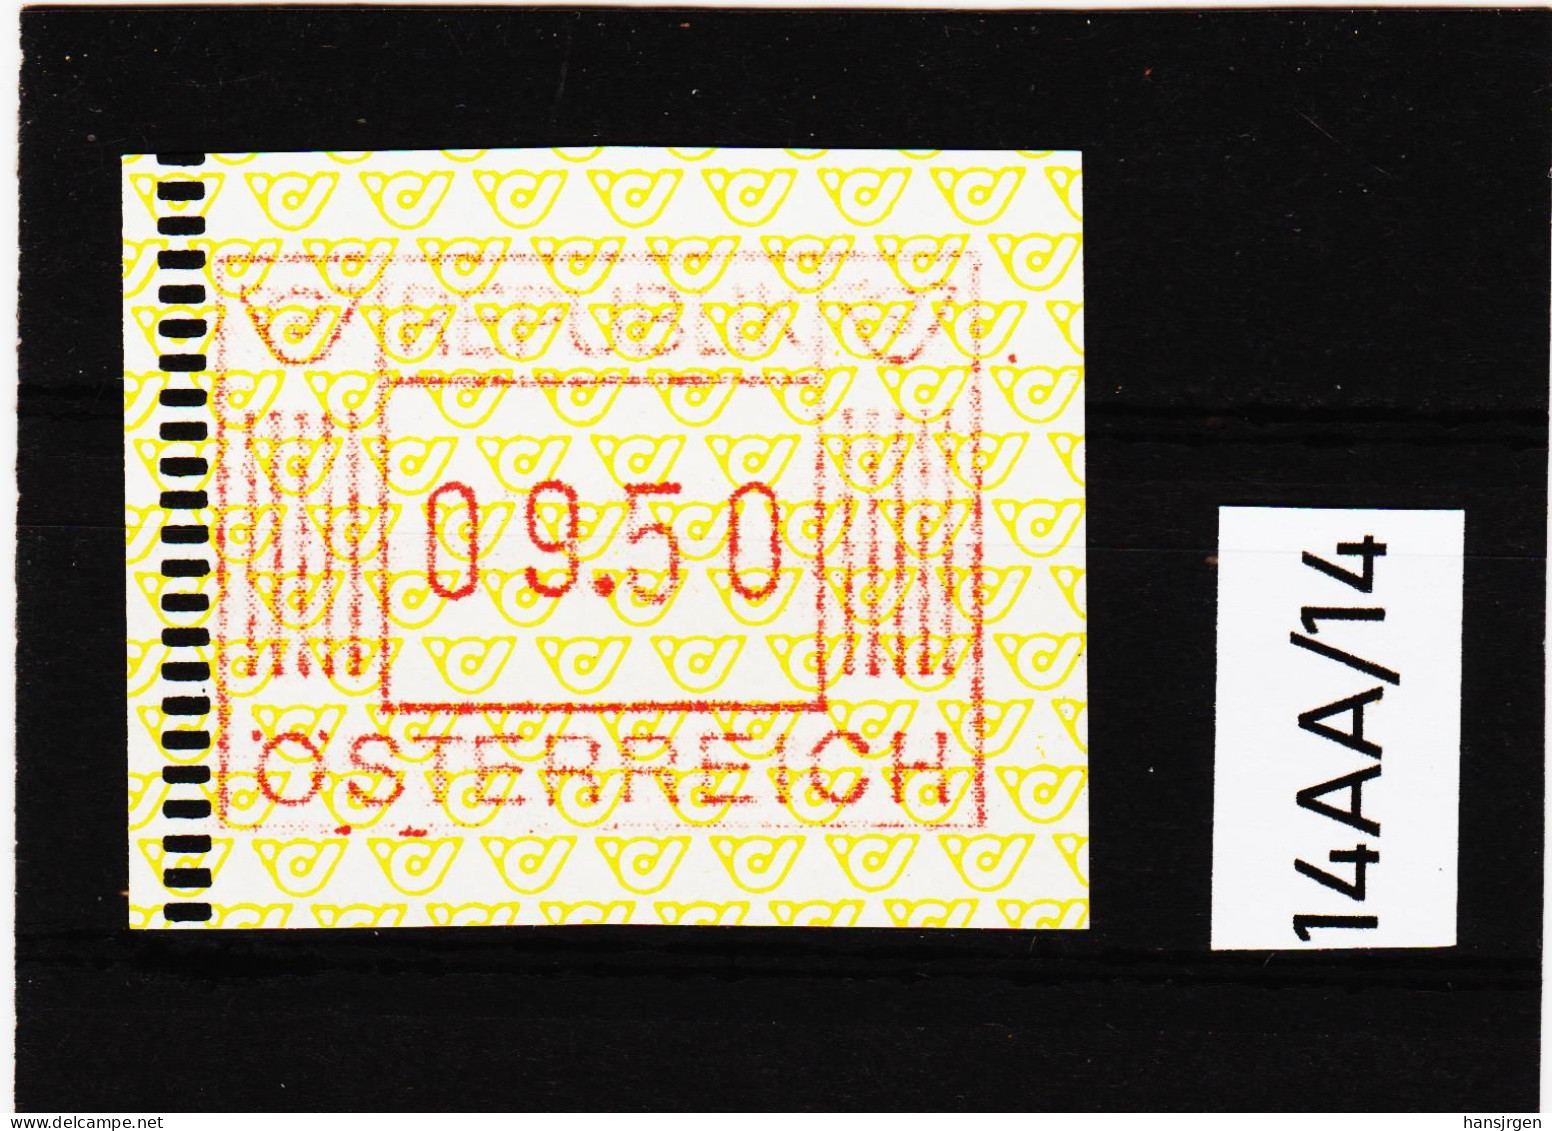 14AA/14  ÖSTERREICH 1983 AUTOMATENMARKEN 1. AUSGABE  9,50 SCHILLING   ** Postfrisch - Timbres De Distributeurs [ATM]